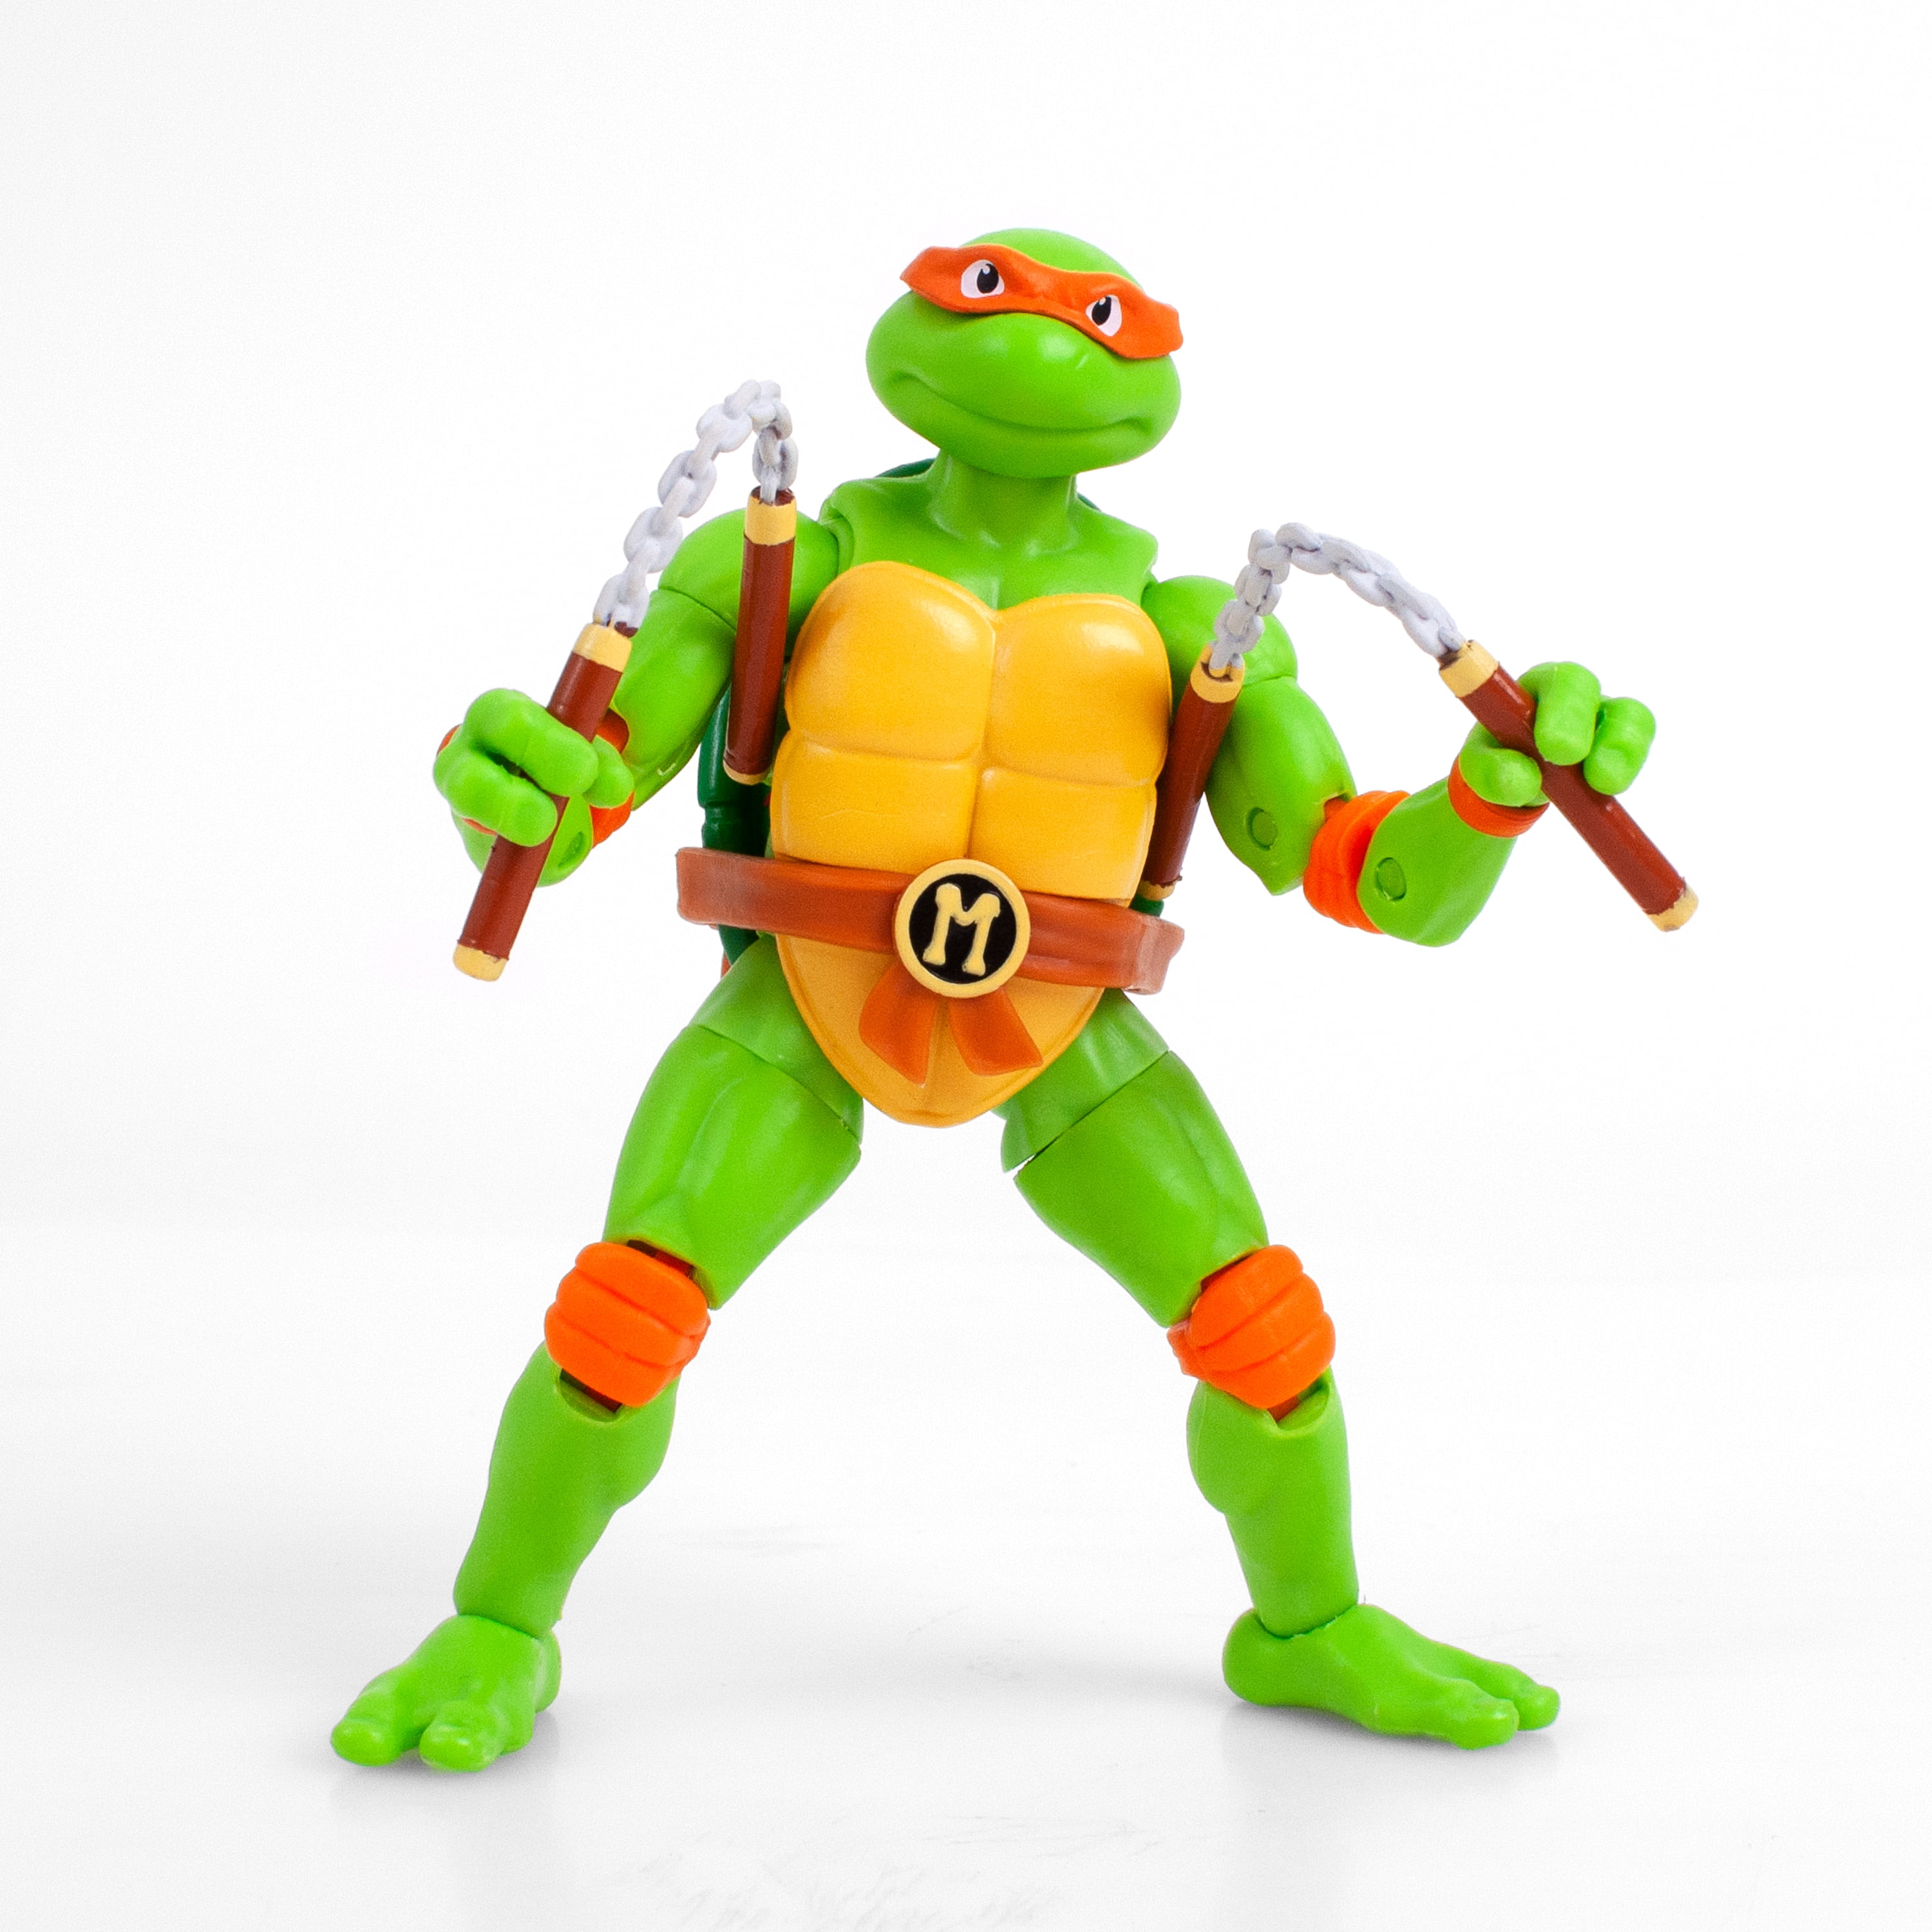 New in Box Michelangelo Teenage Mutant Ninja Turtles figure Classic Collection 